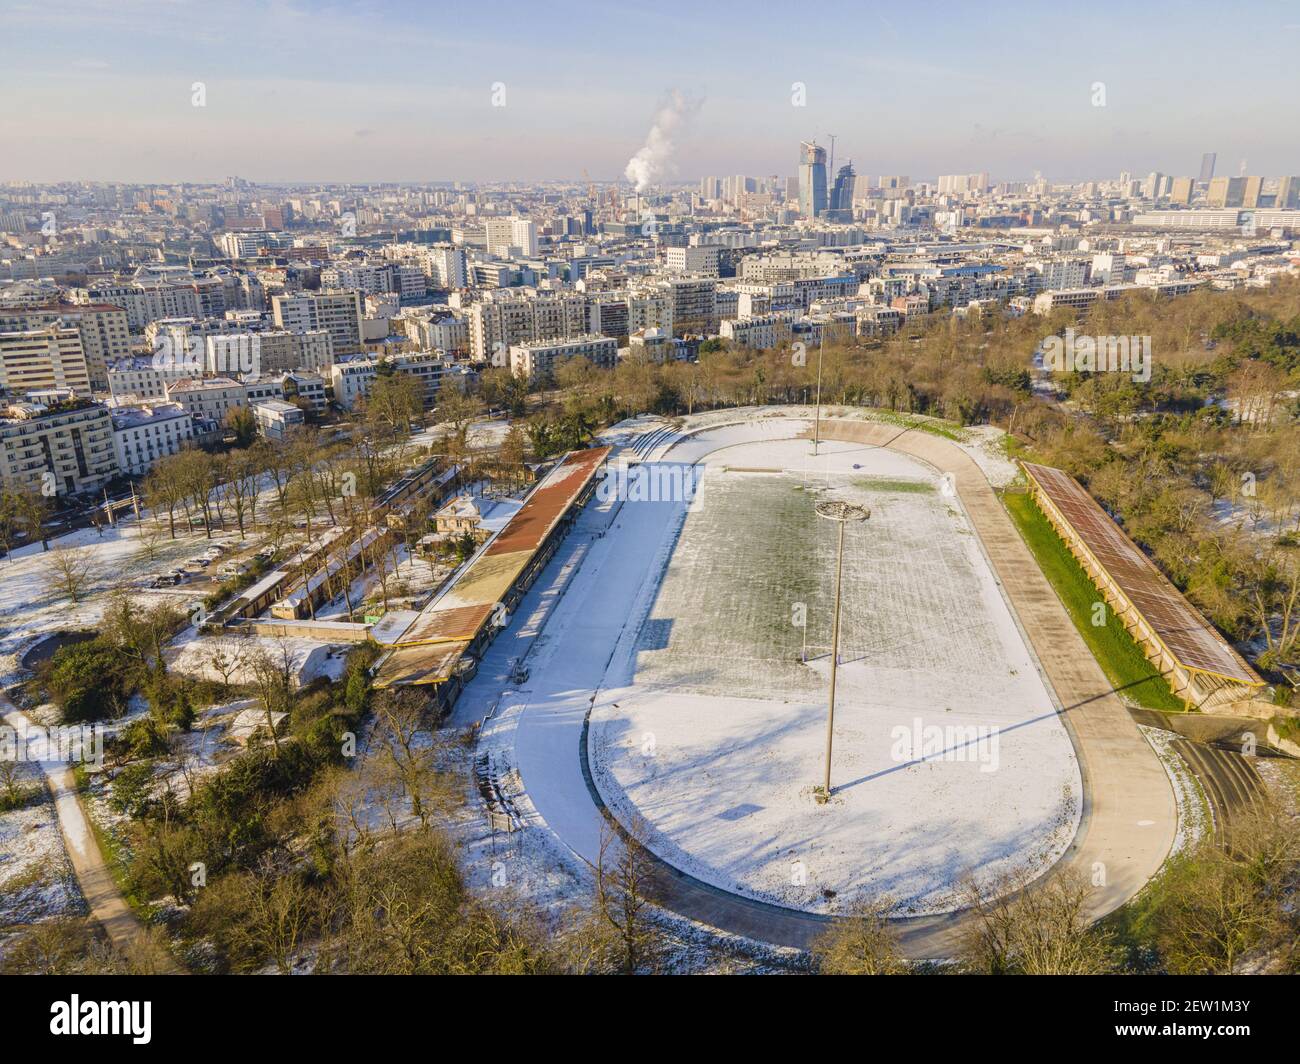 France, Paris, Bois de Vincennes, the Jacques Anquetil stadium and velodrome under the snow in winter (aerial view) Stock Photo